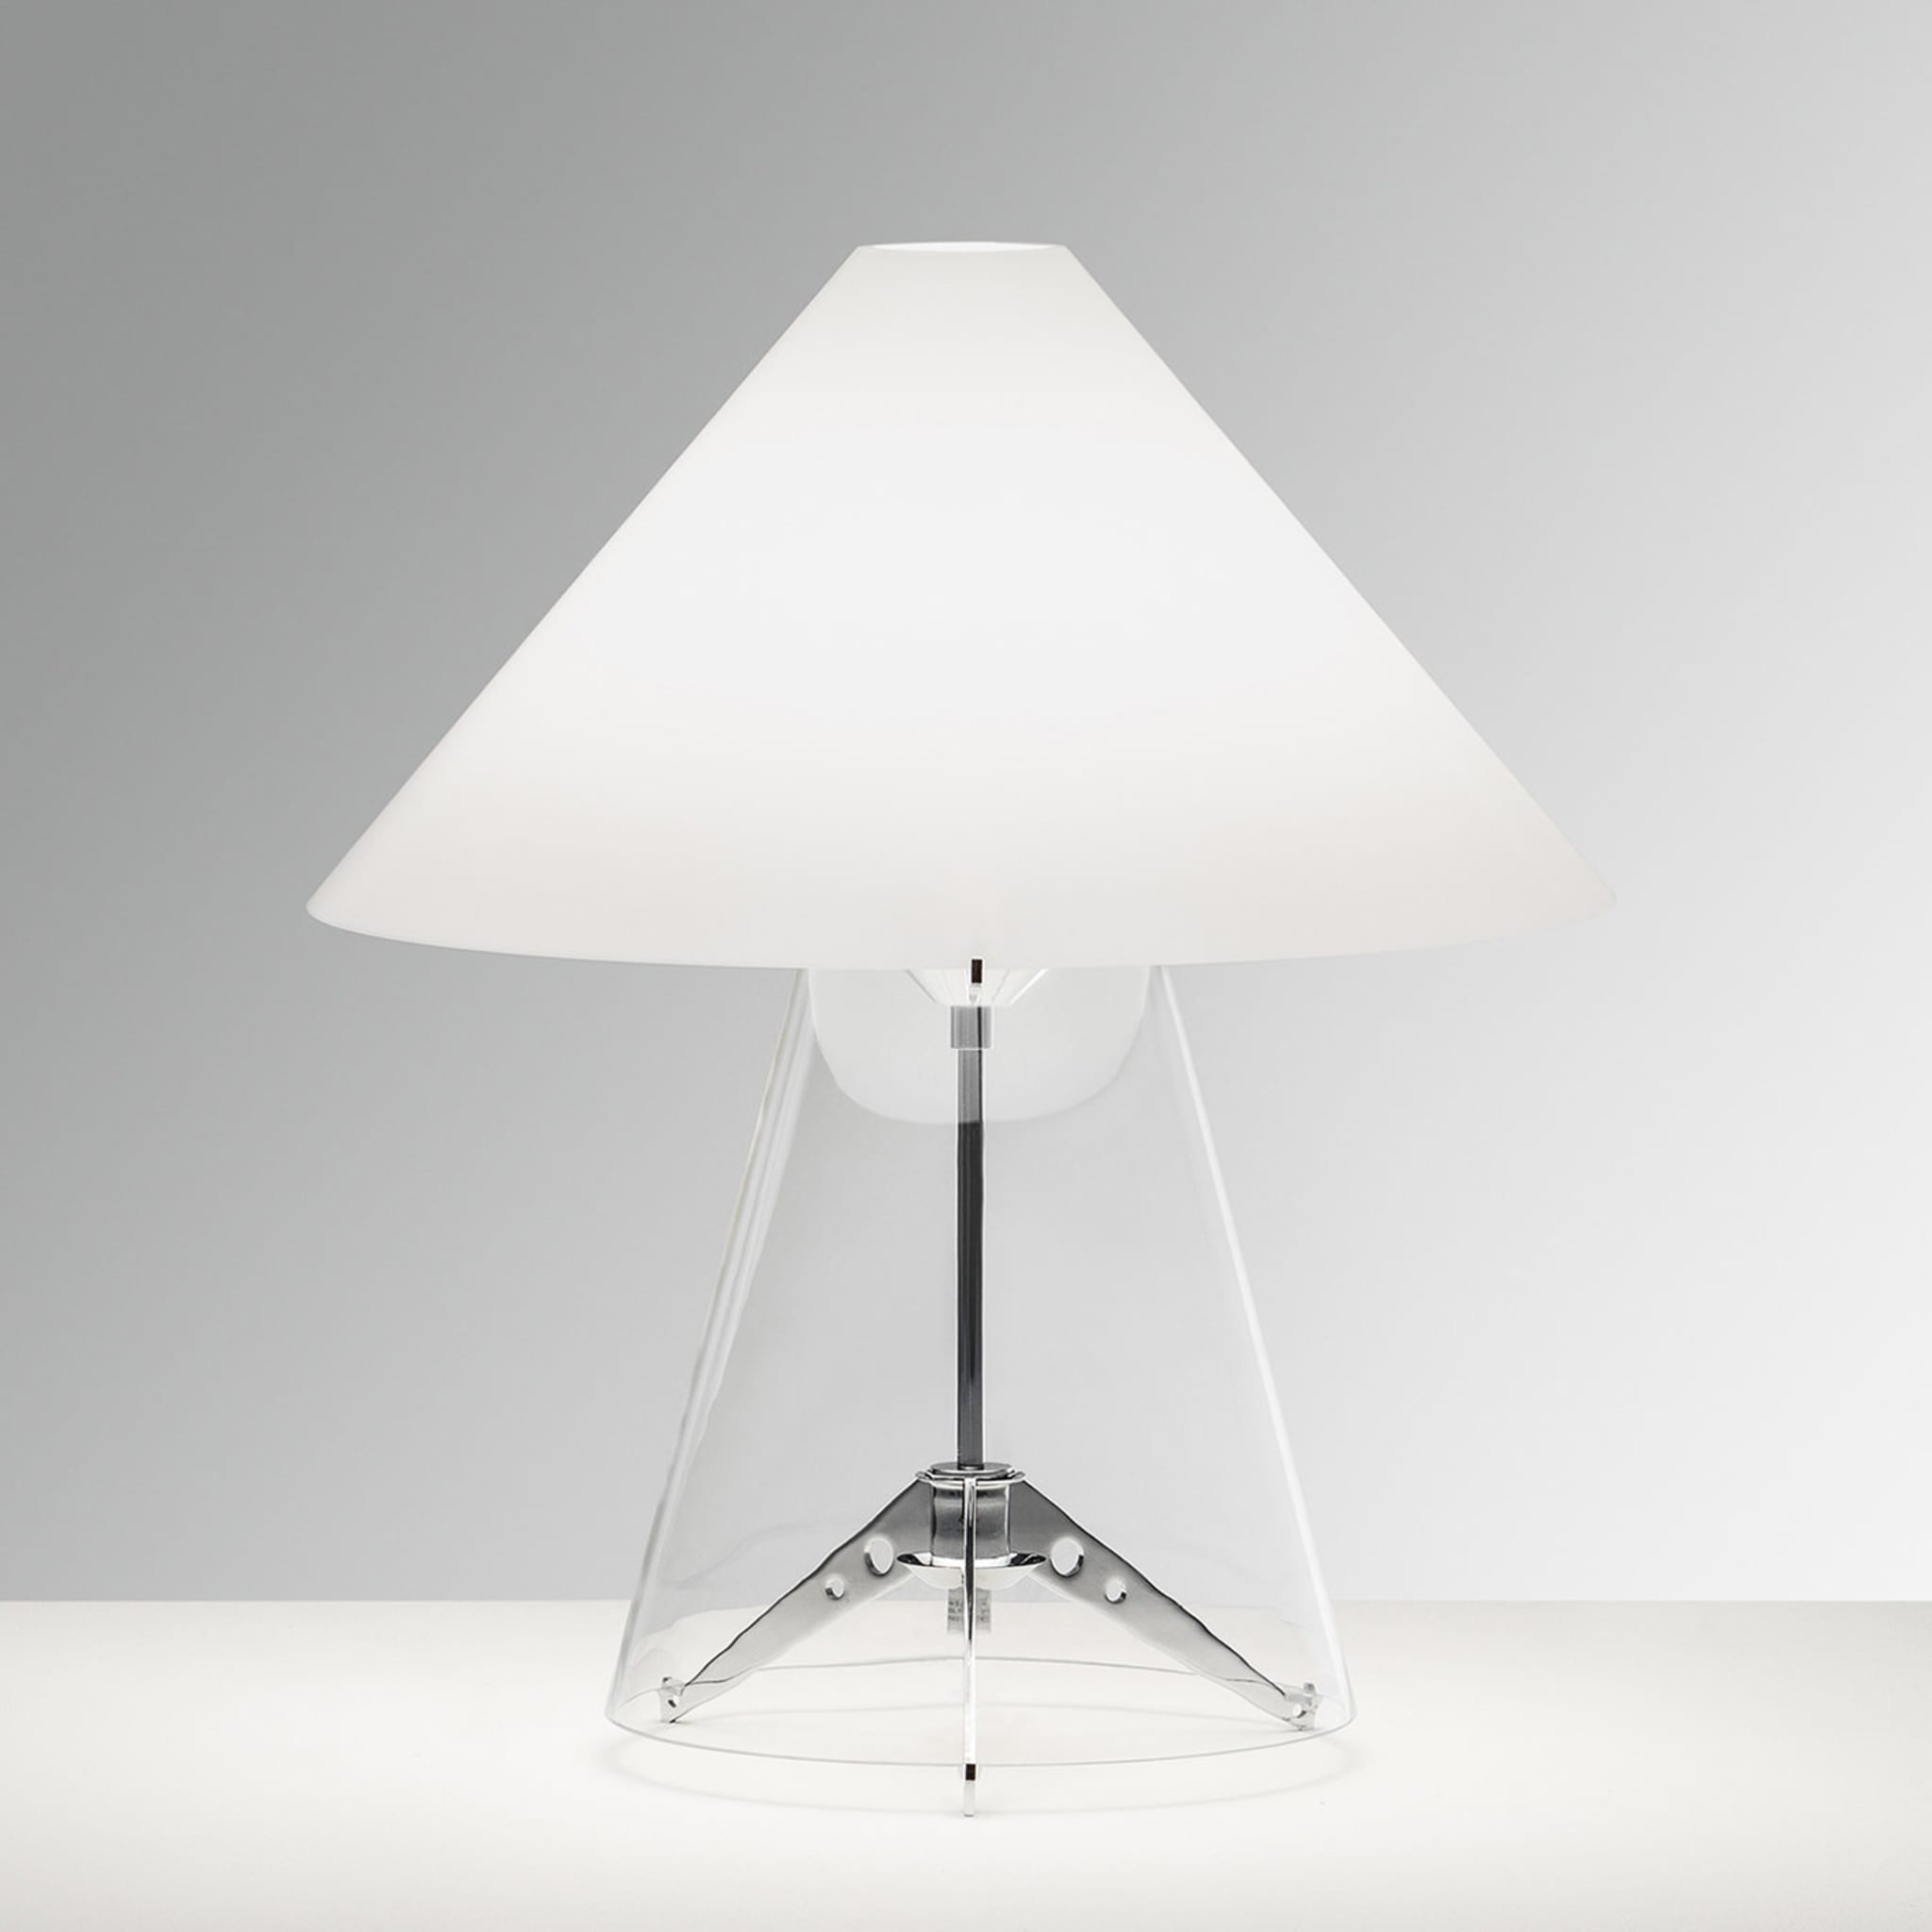 Metafora Table Lamp by Umberto Riva - Alternative view 2